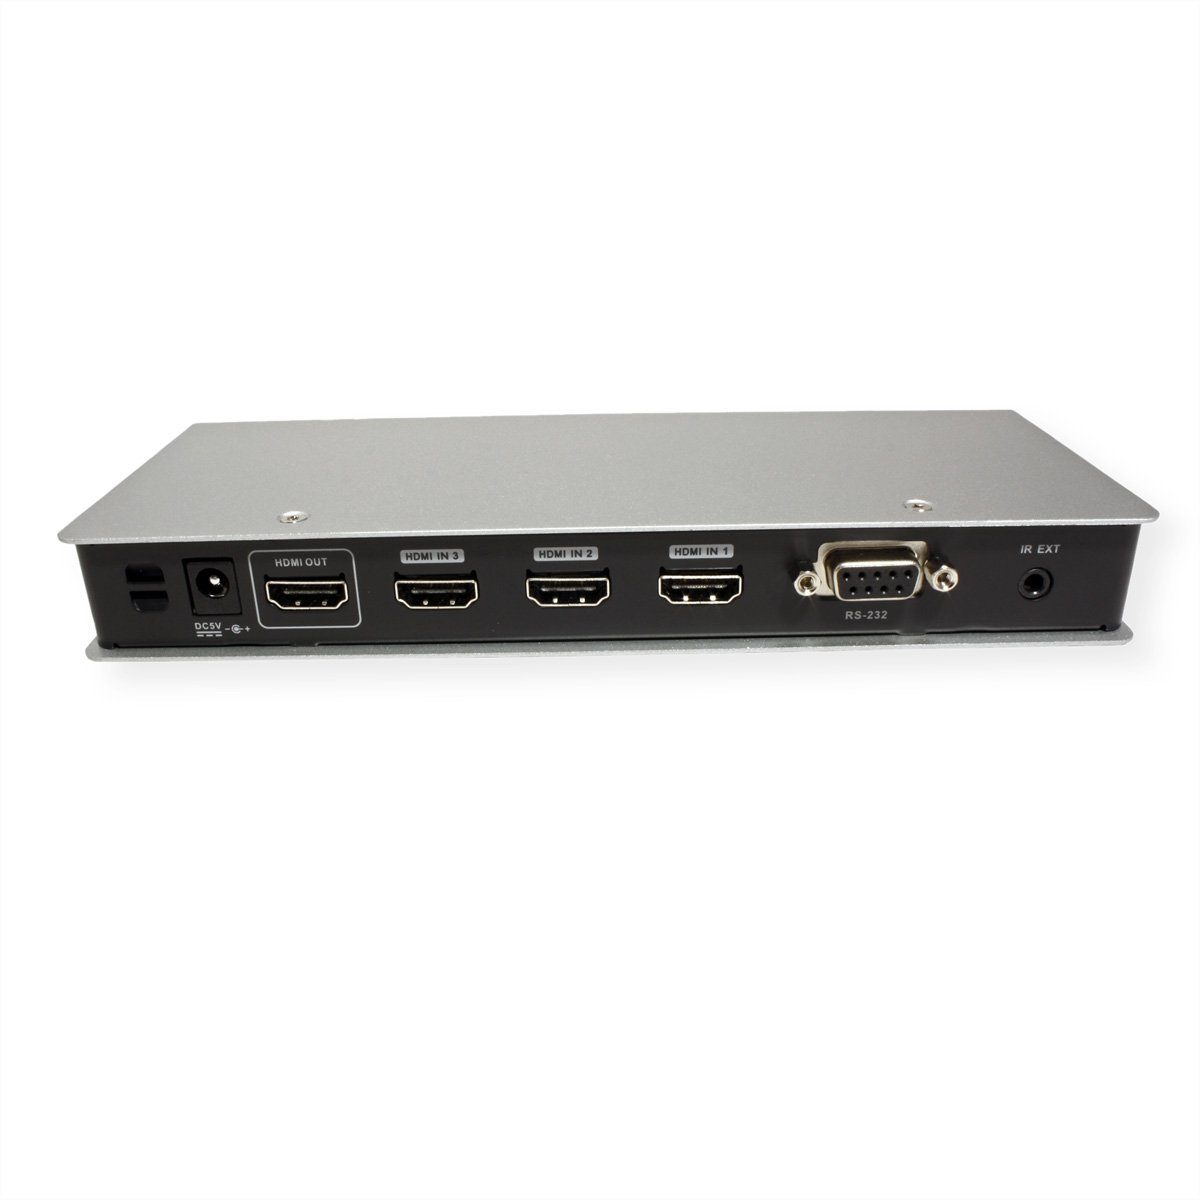 Aten VS481B Ports Video-Adapter Audio- 4 mit 4K HD Ultra & Switch HDMI